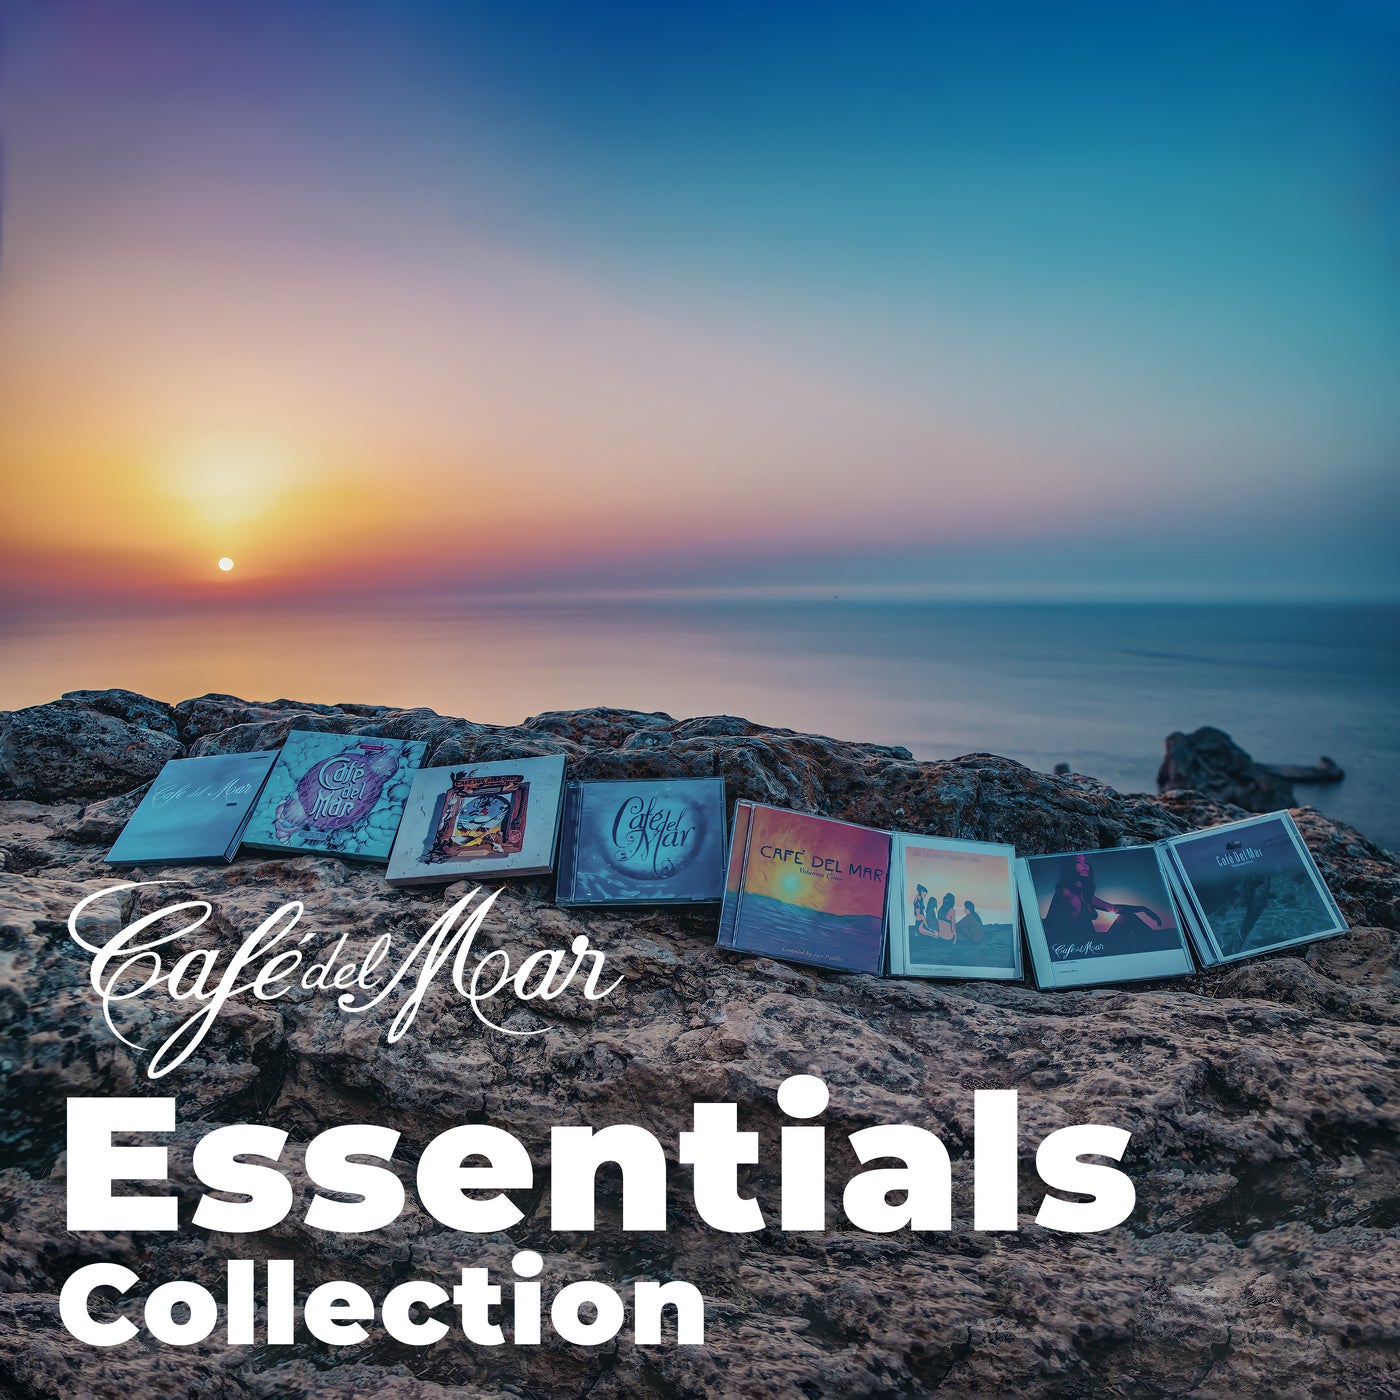 Essentials - Collection